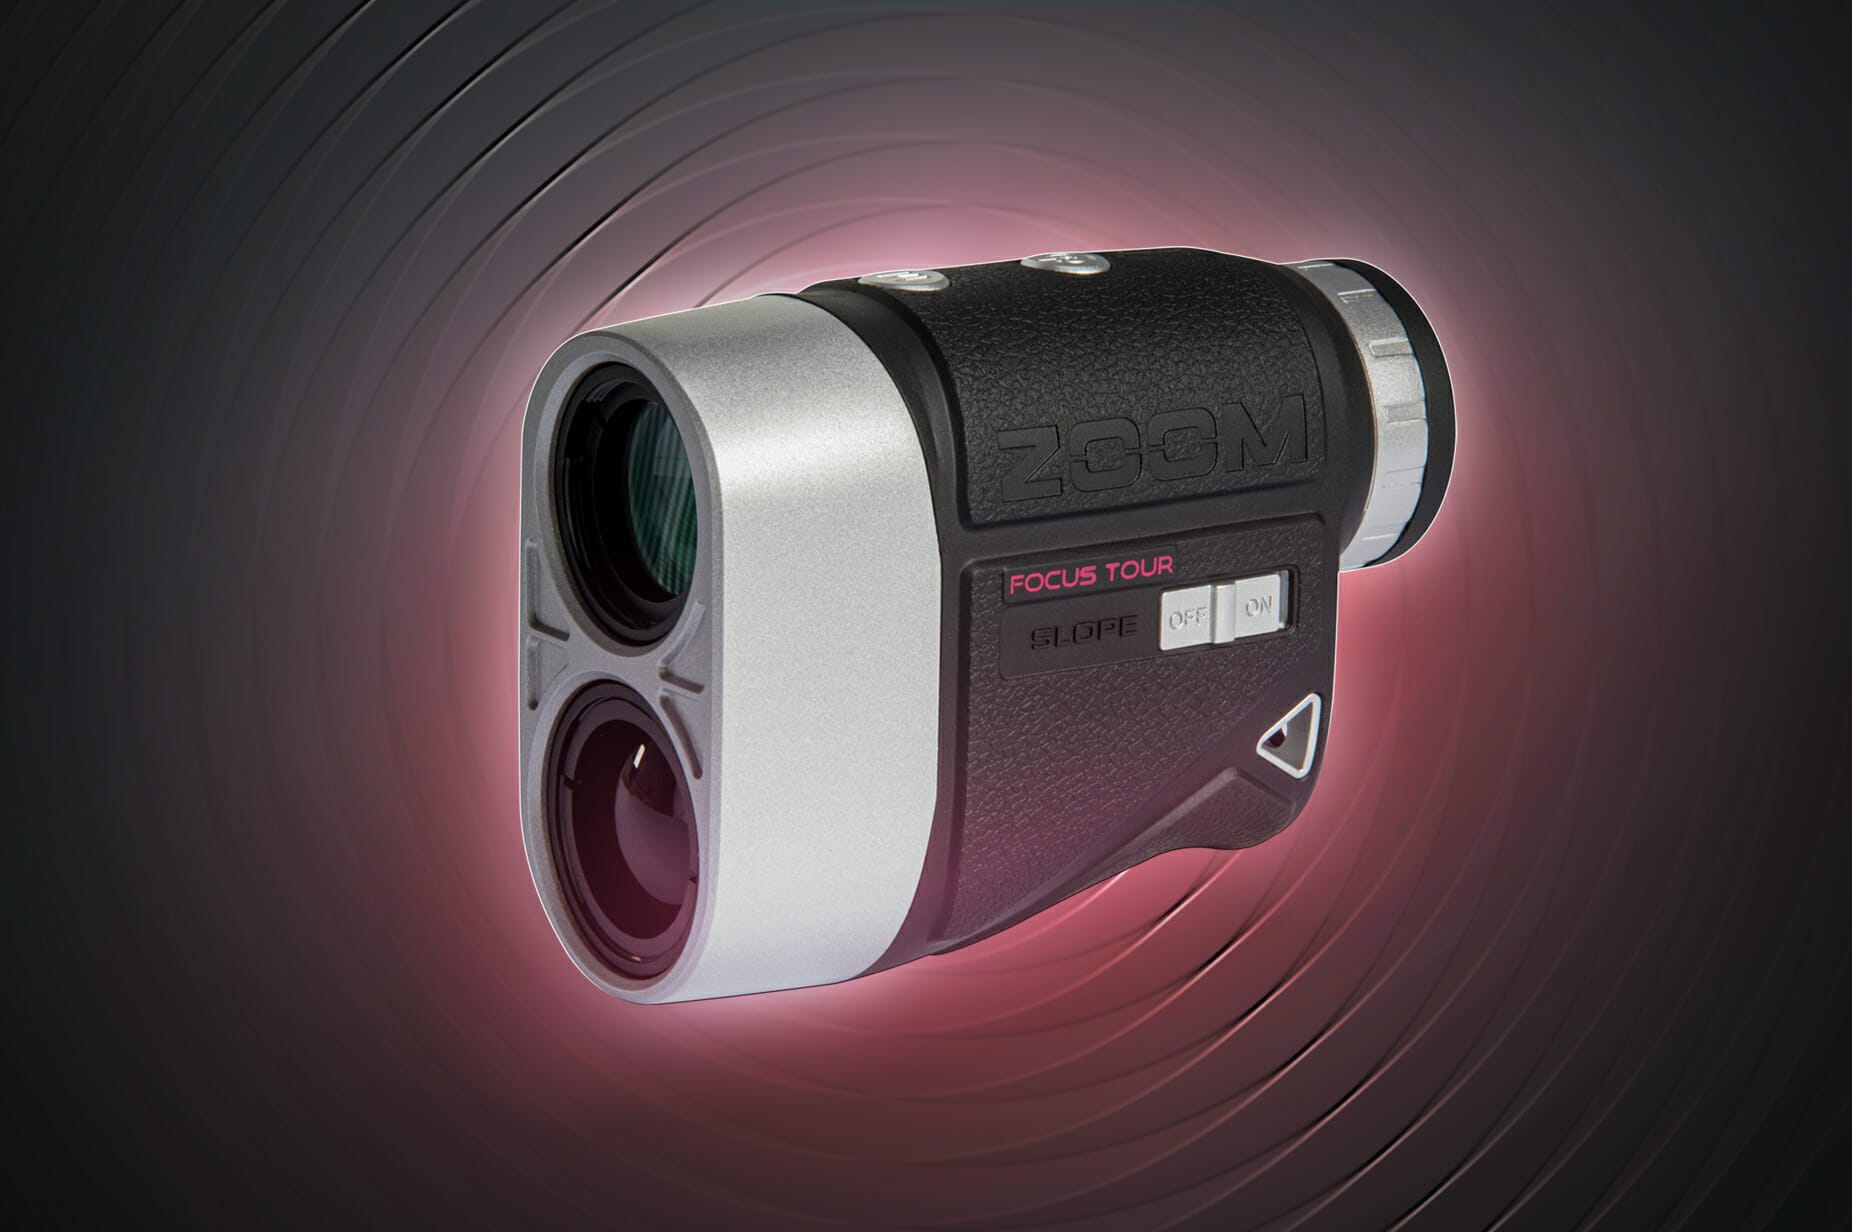 ZOOM Focus Tour – Premium Laser Technology Meets Timeless, Elegant Design